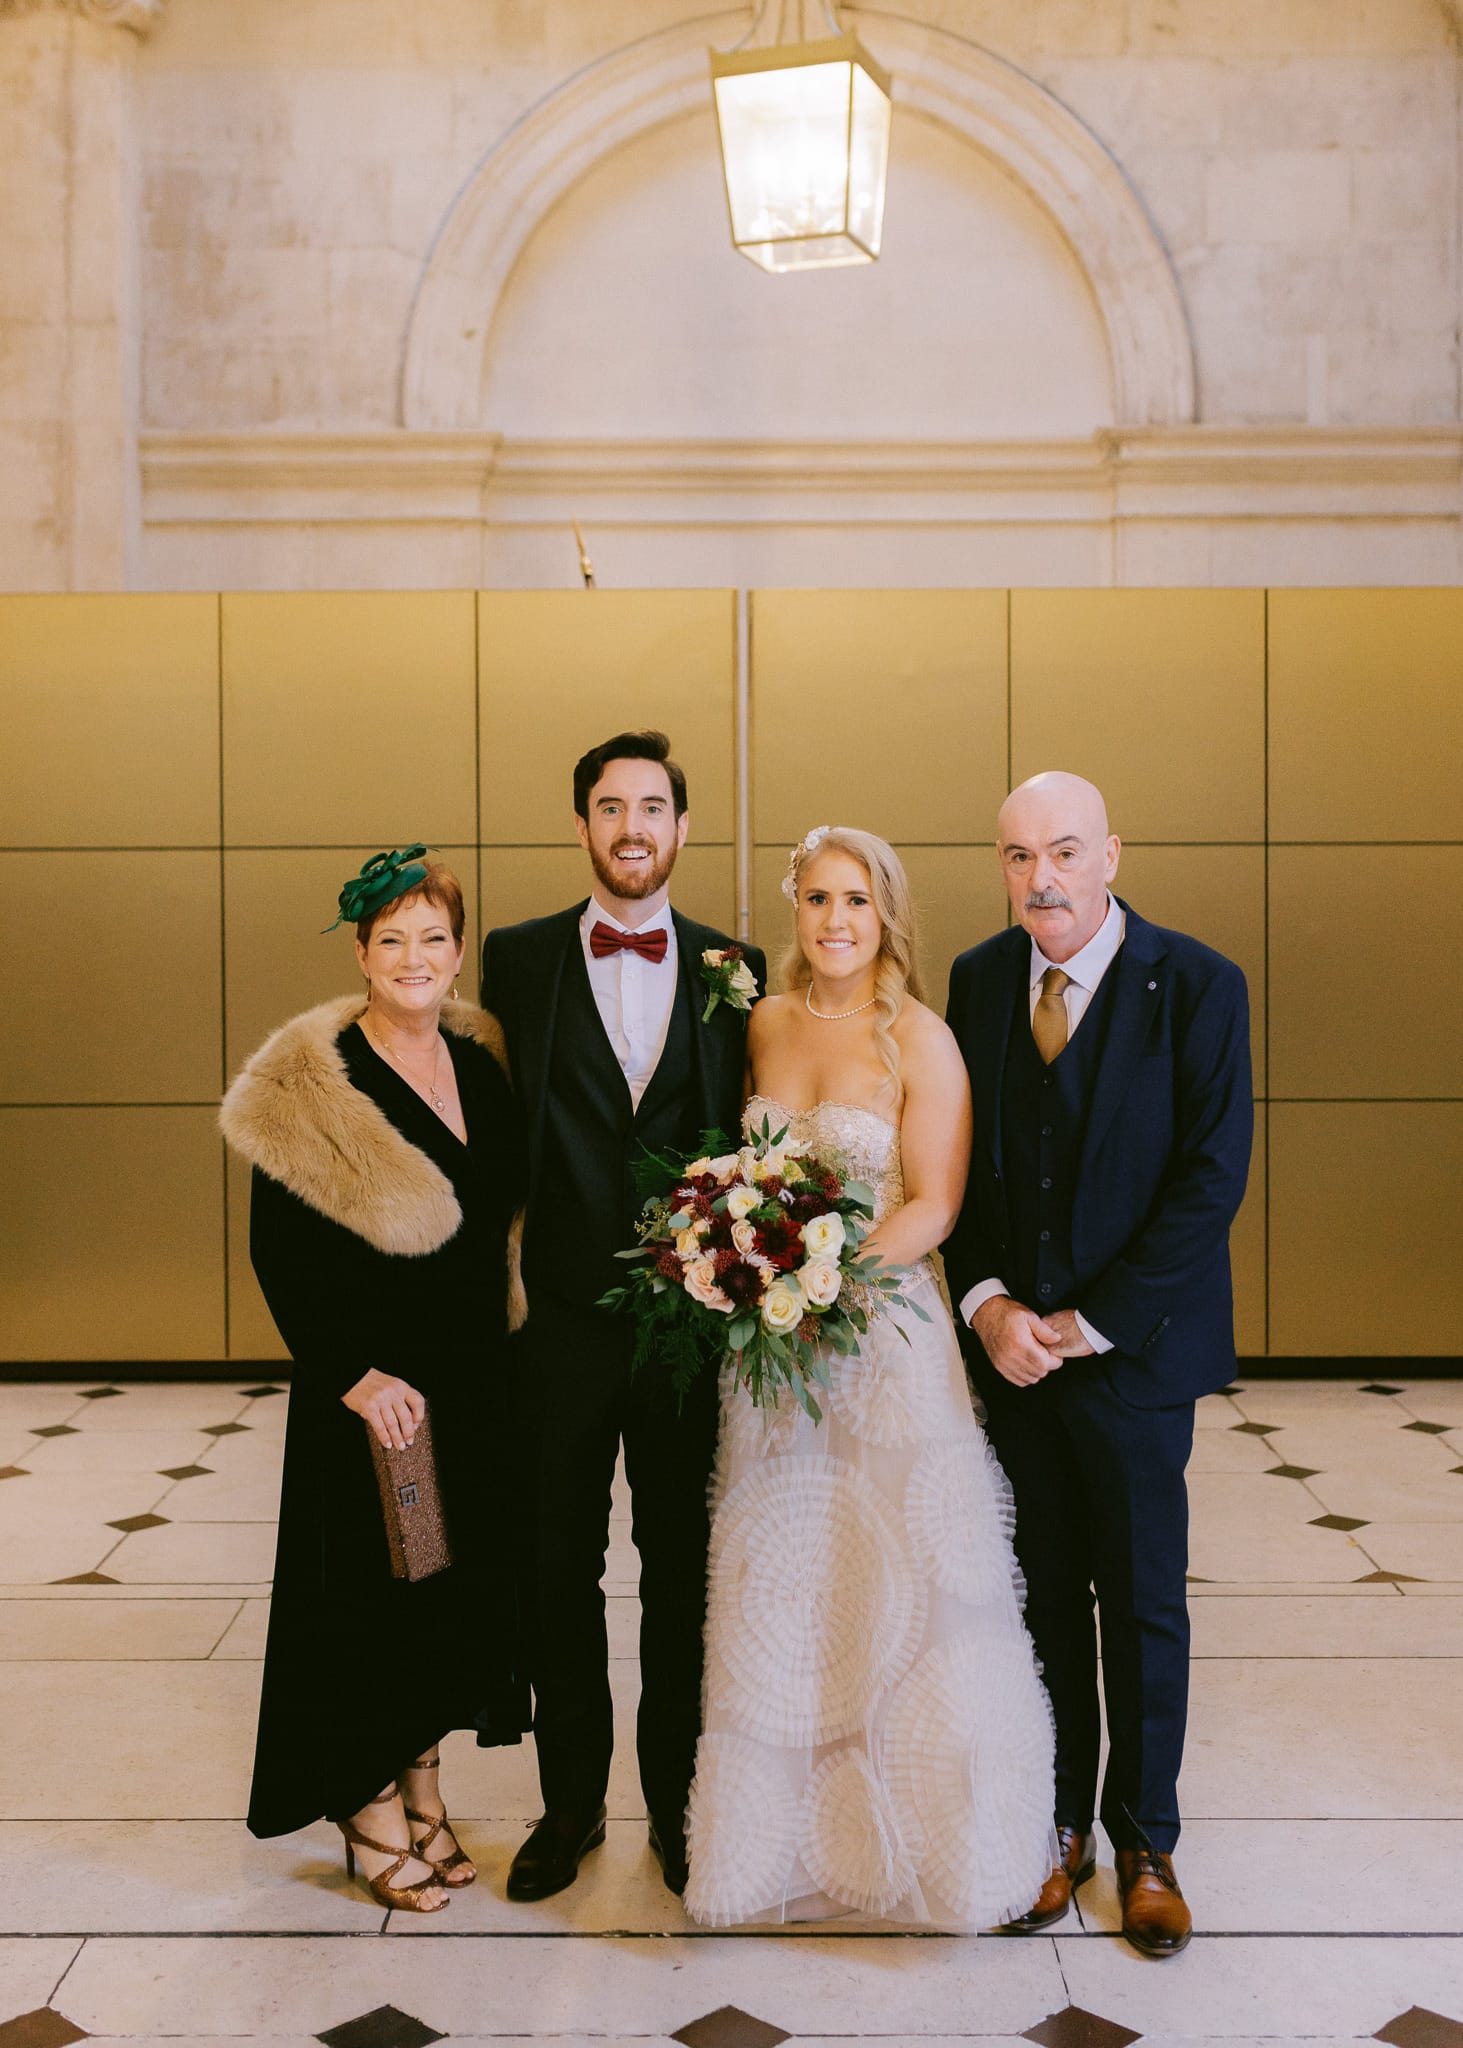 Dublin City Hall Wedding Ceremony Family Photos28